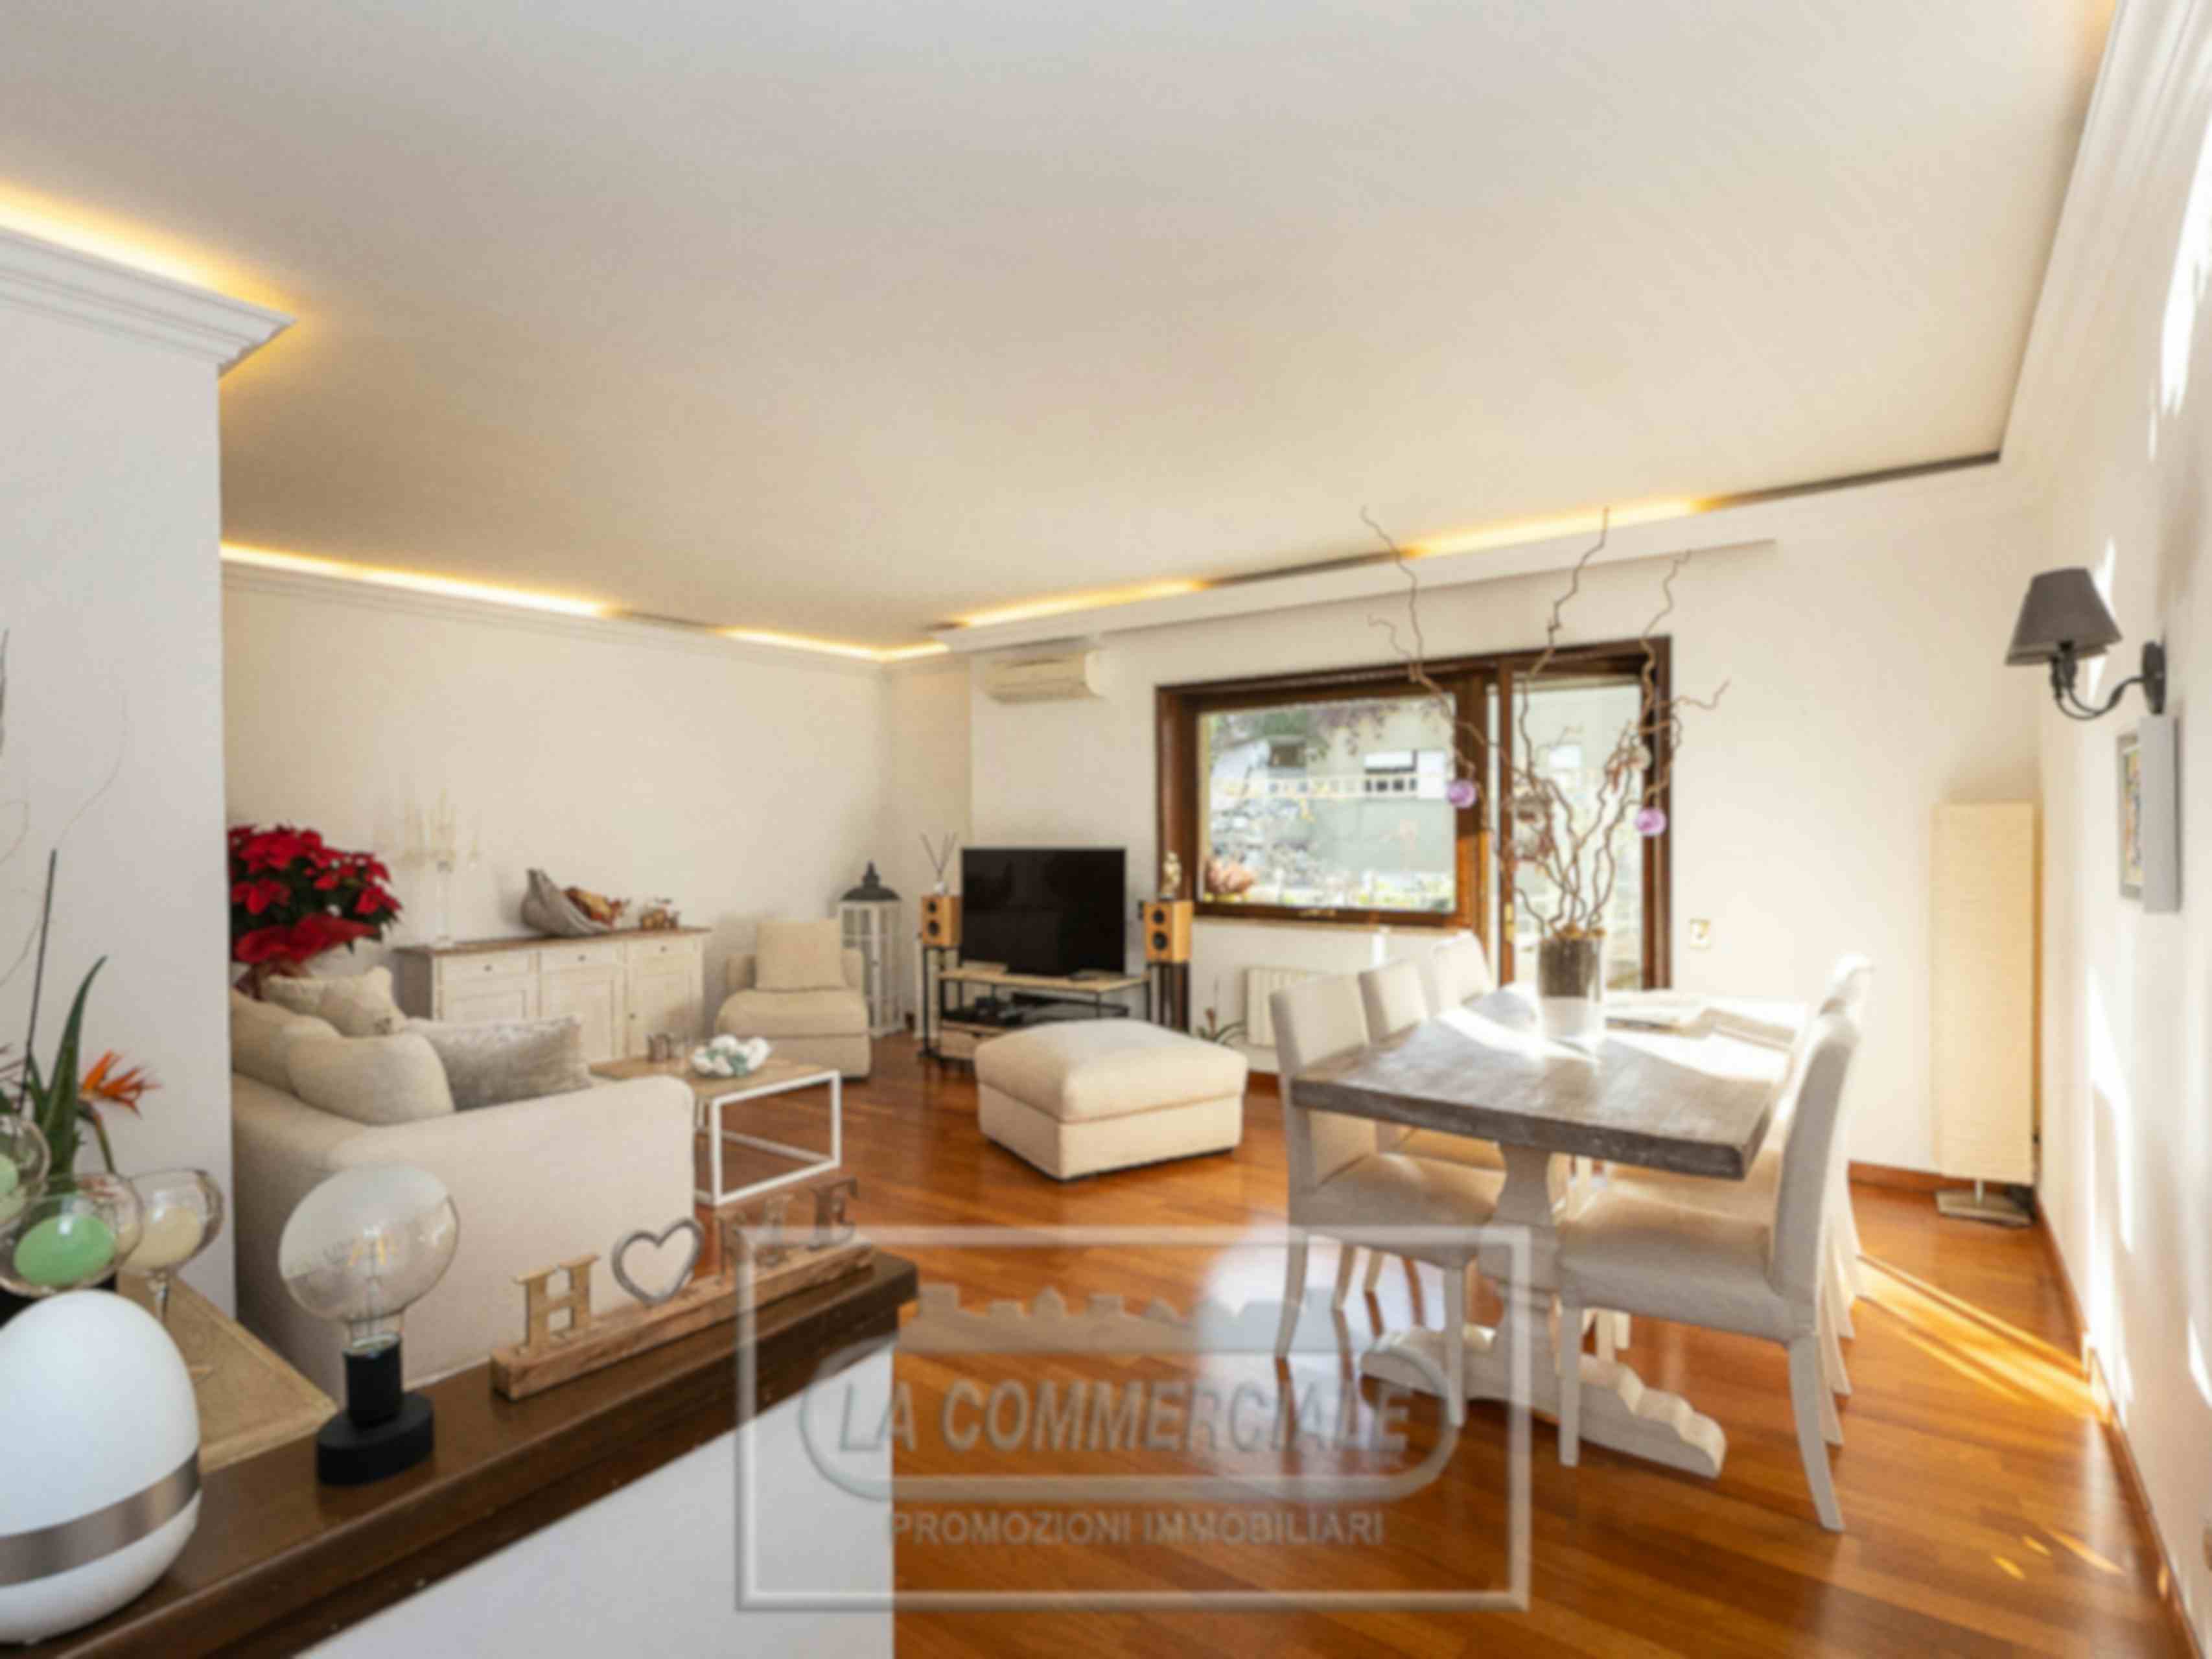 Three-bedroom Apartment of 145m² in Viale Cortina d'Ampezzo